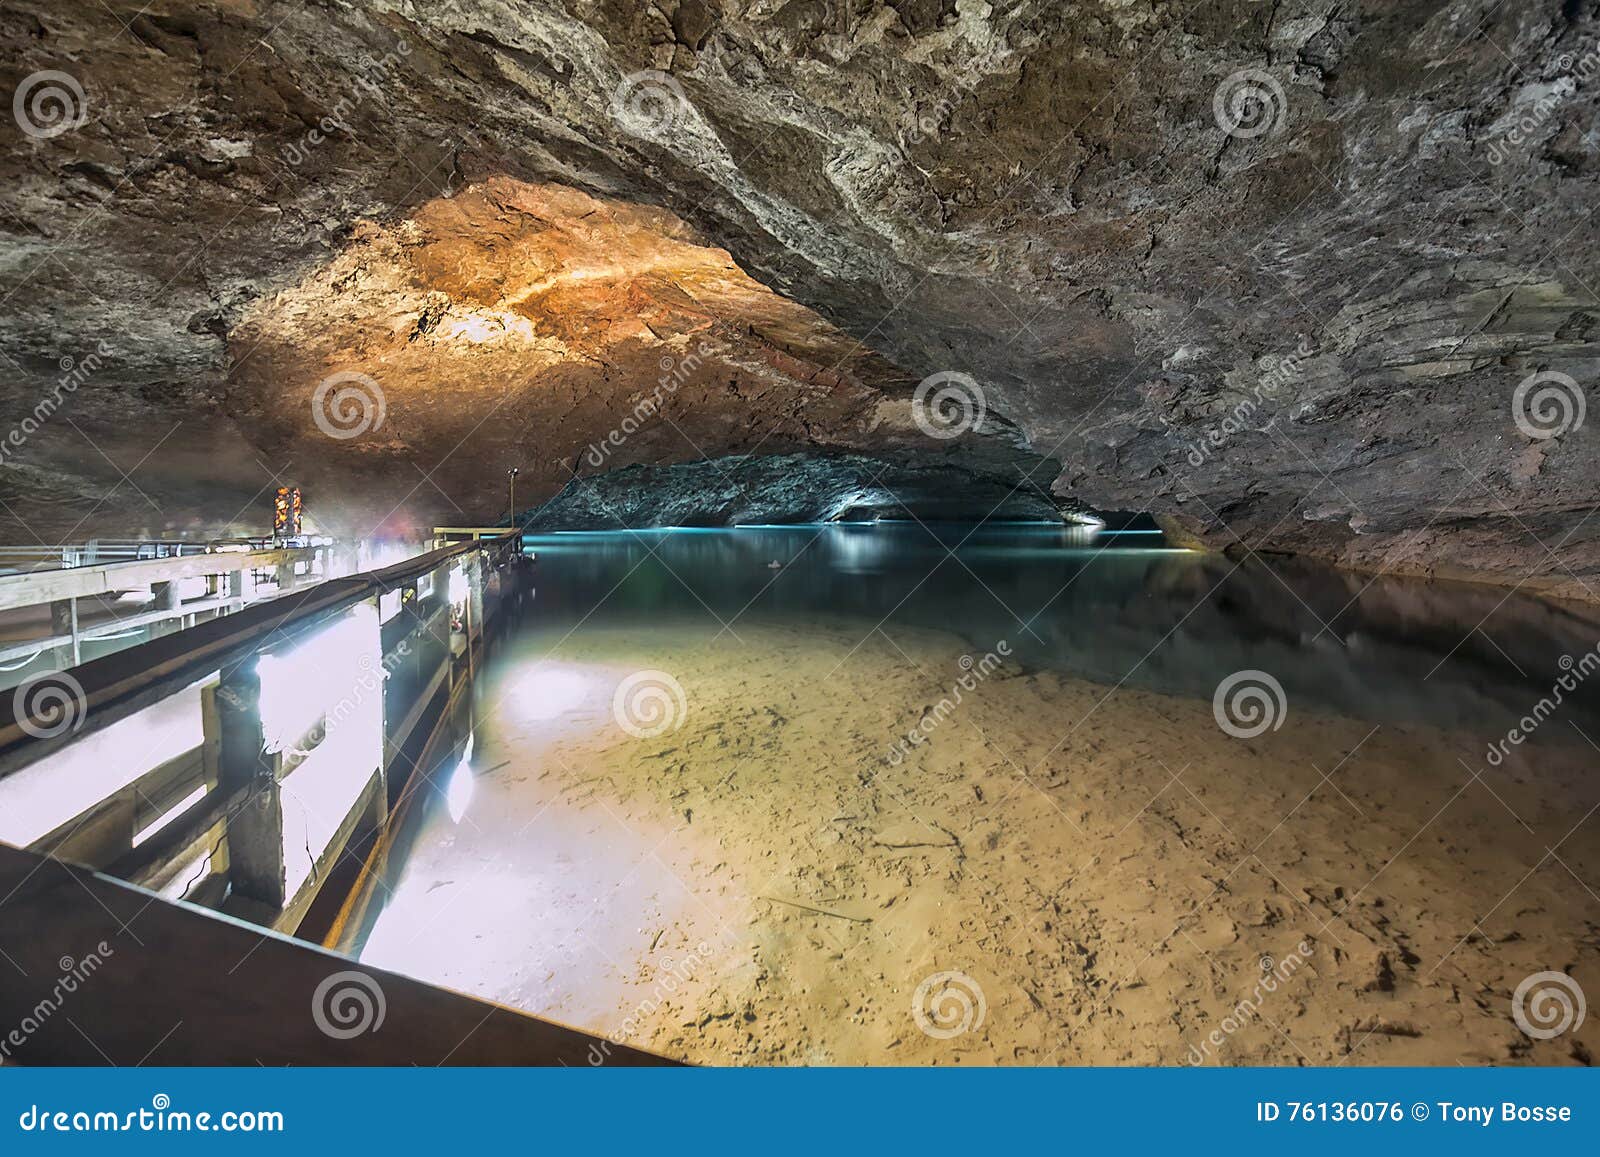 the lost sea inside craighead caverns